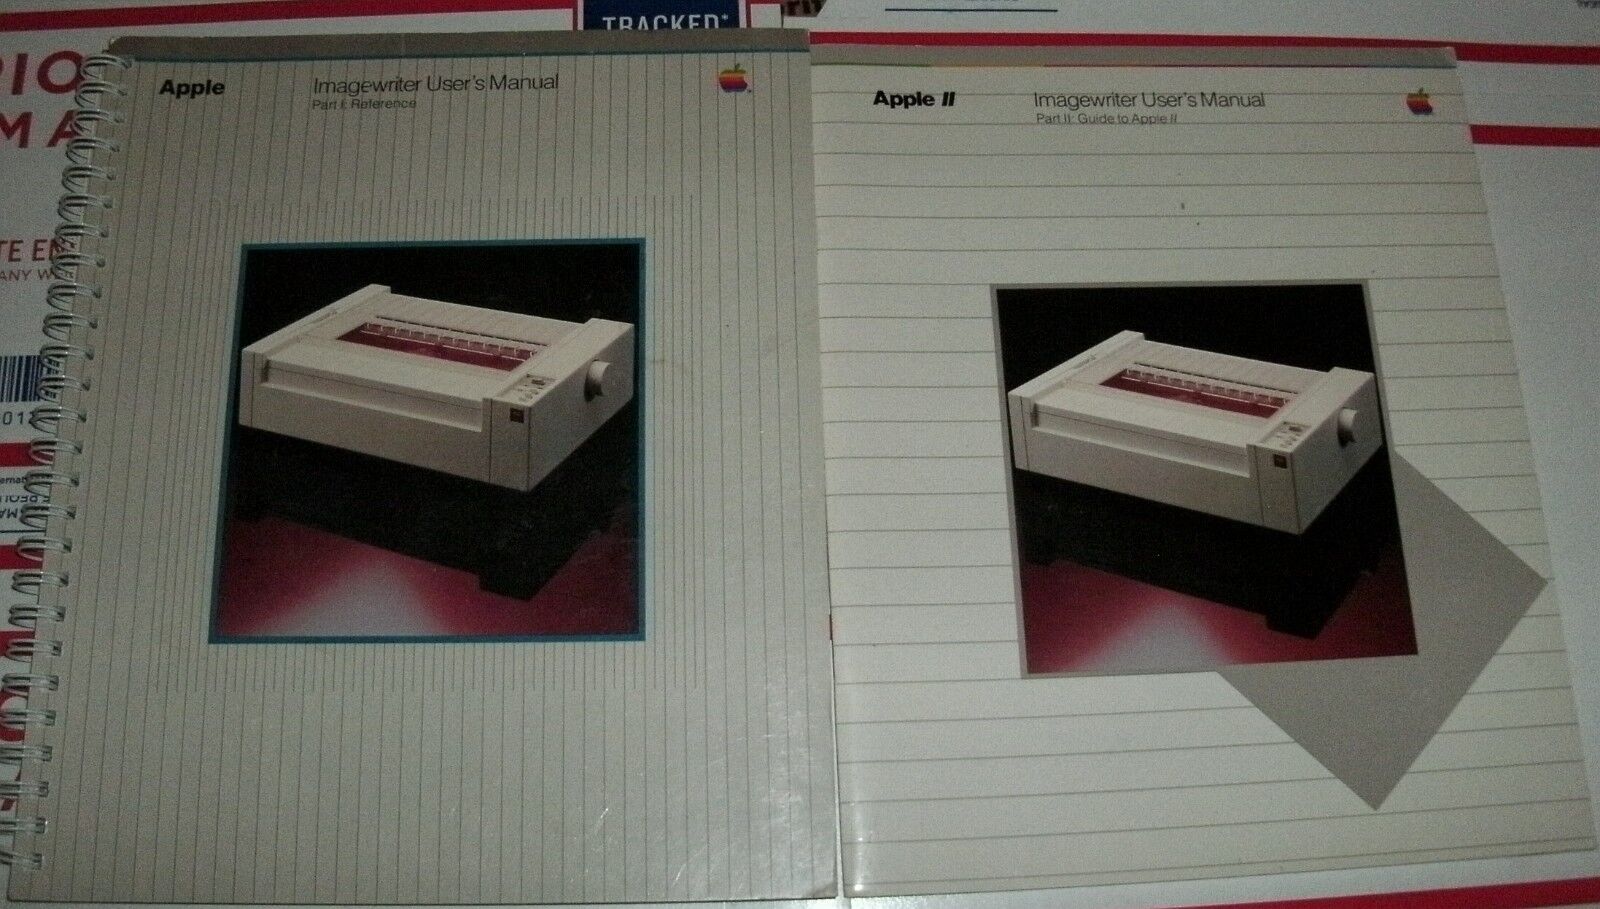 1983 Apple ImageWriter I Printer Manuals 1984 Macintosh 128k 512K II II+ IIe IIc